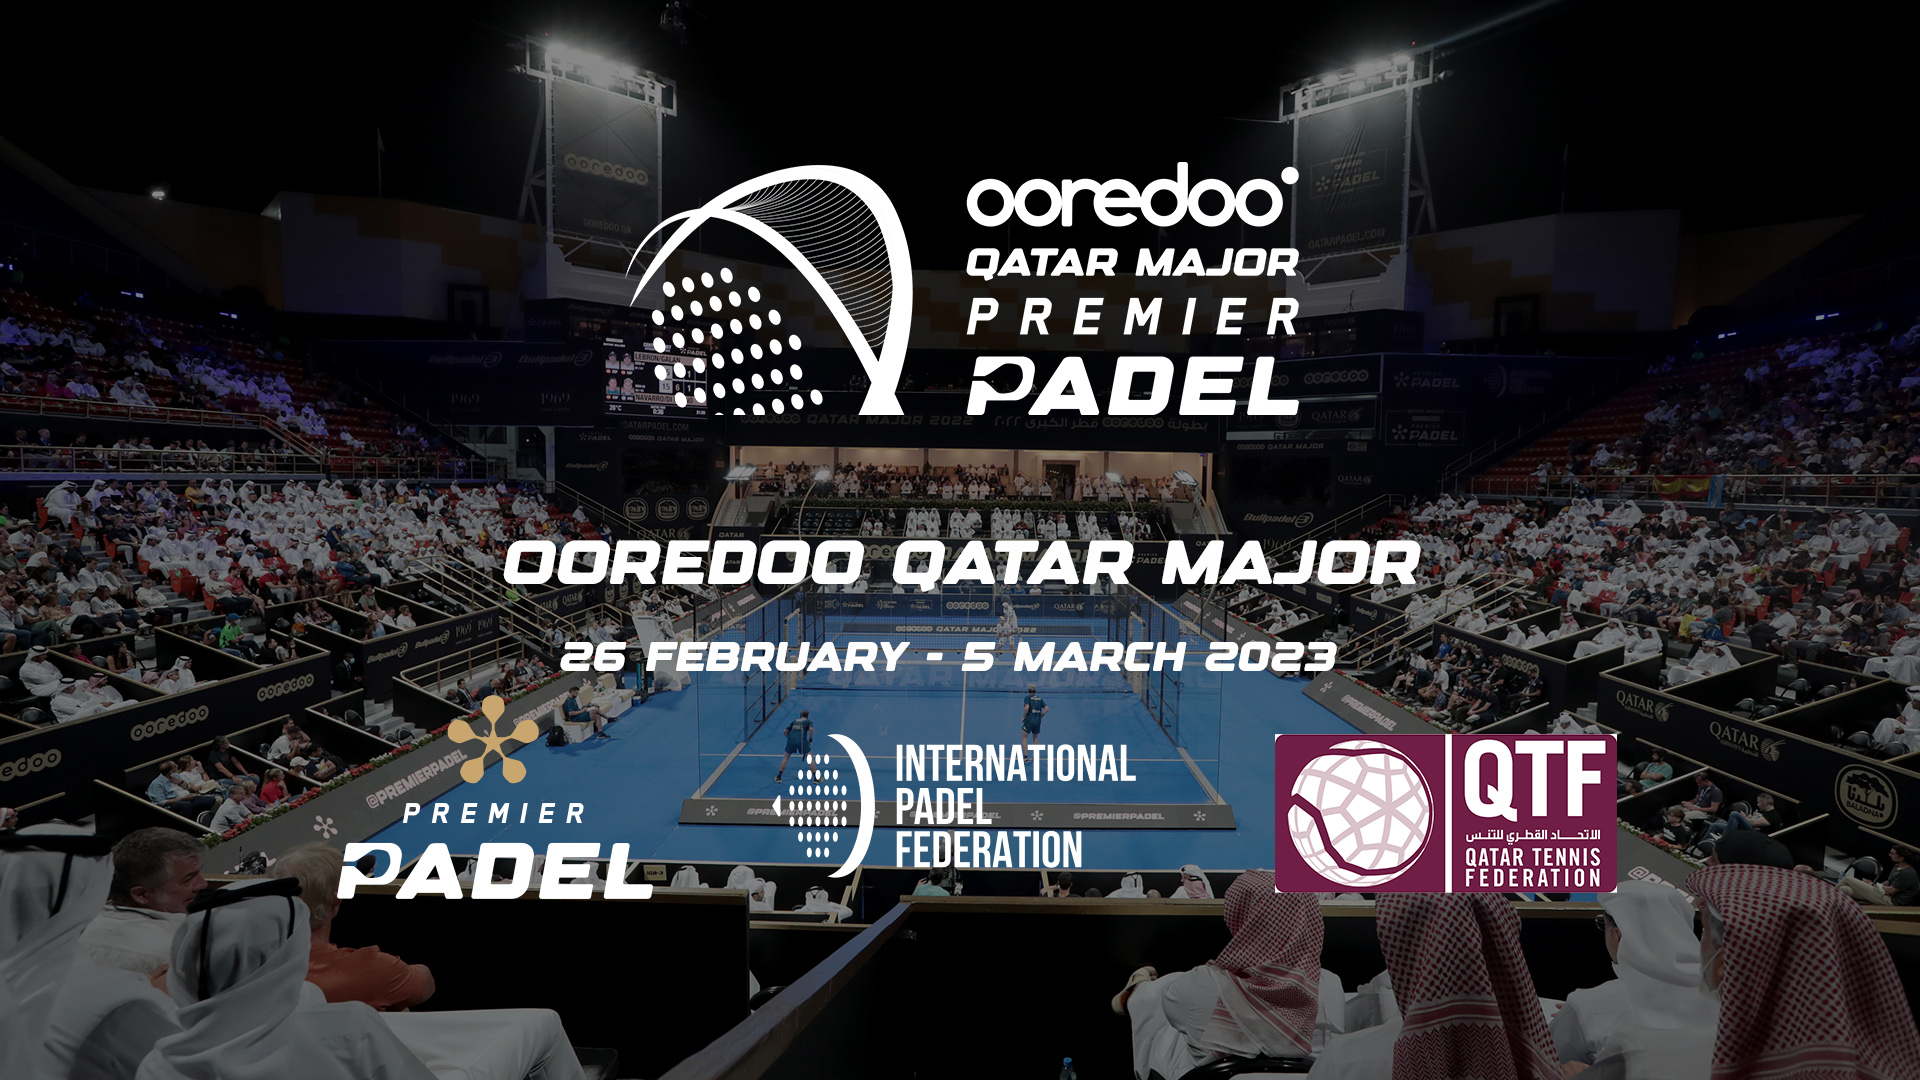 Premier Padel – Das ooredoo Qatar Major 2023 in Doha vom 26. Februar bis 5. März!